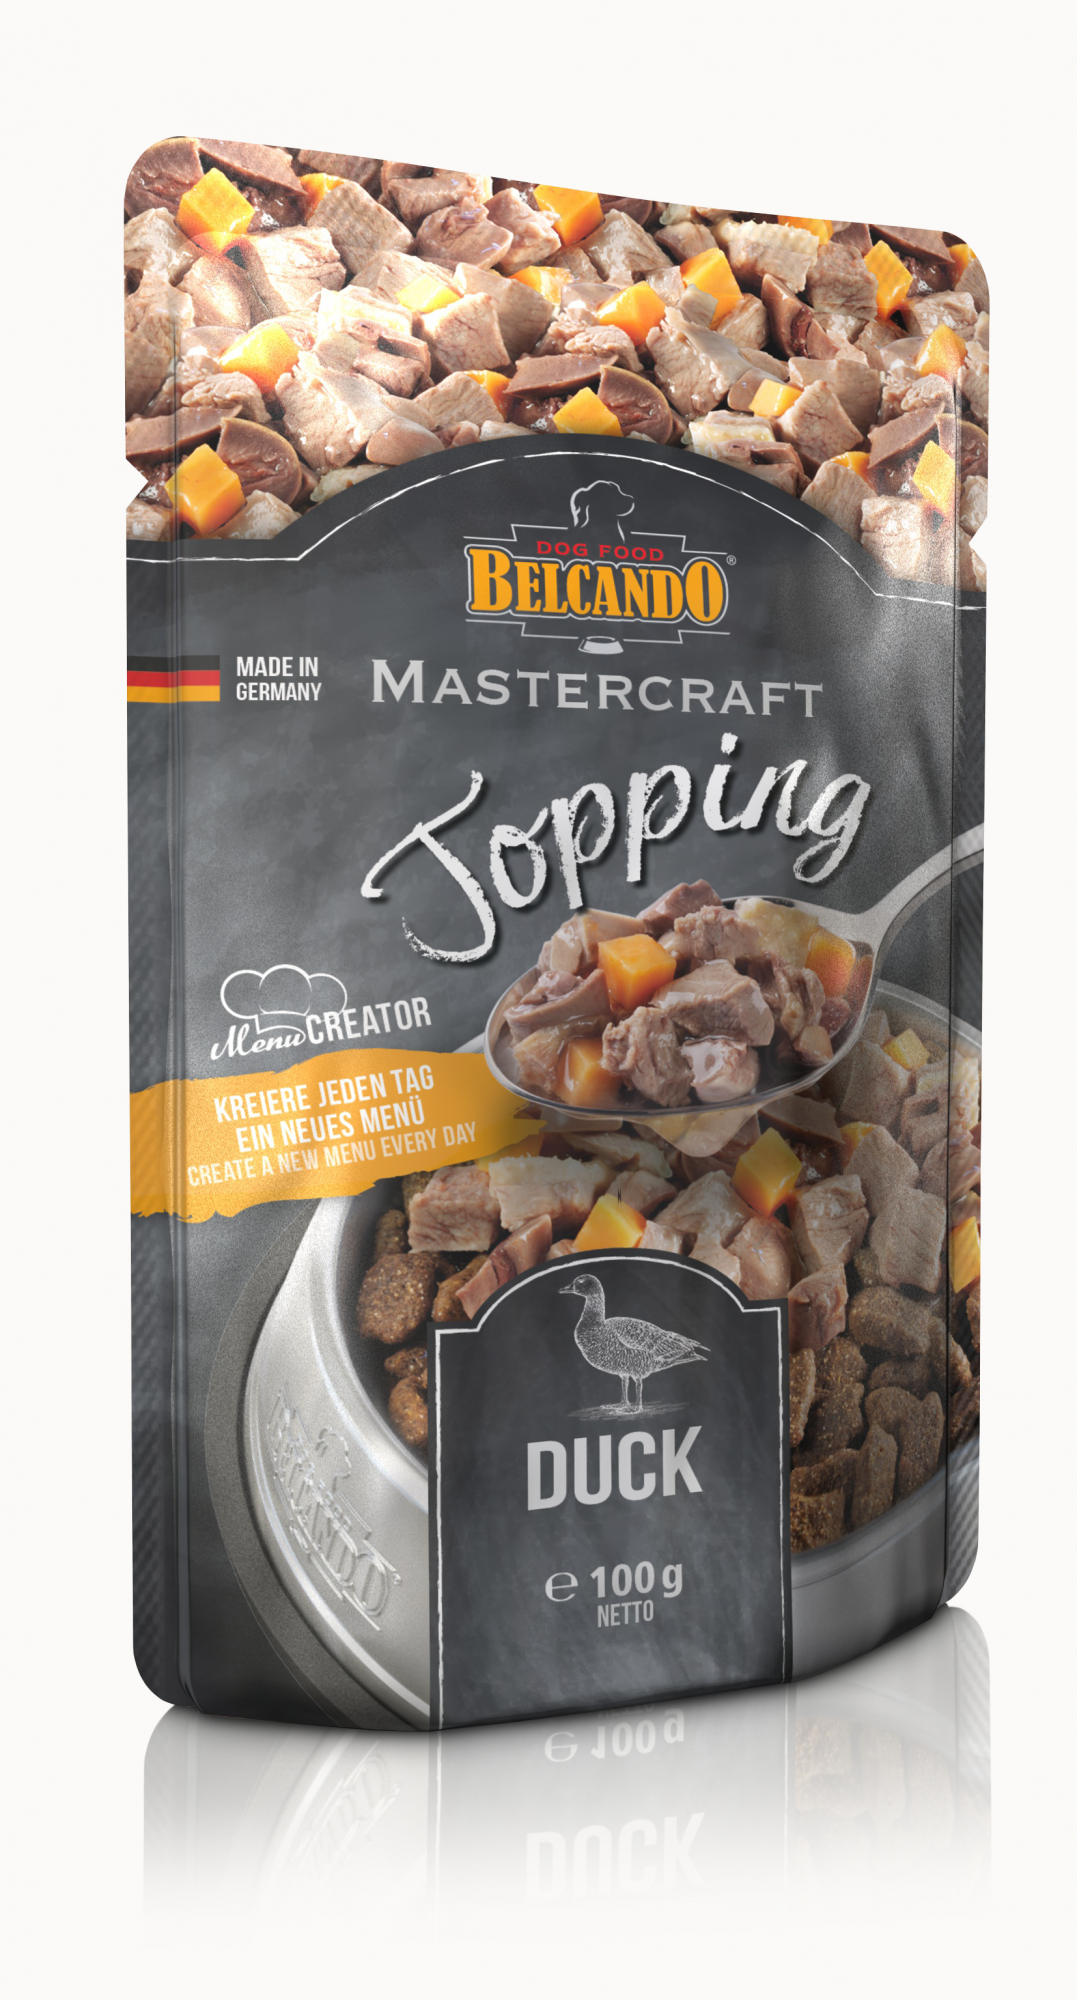 Belcando Mastercraft Topping au canard pour chien